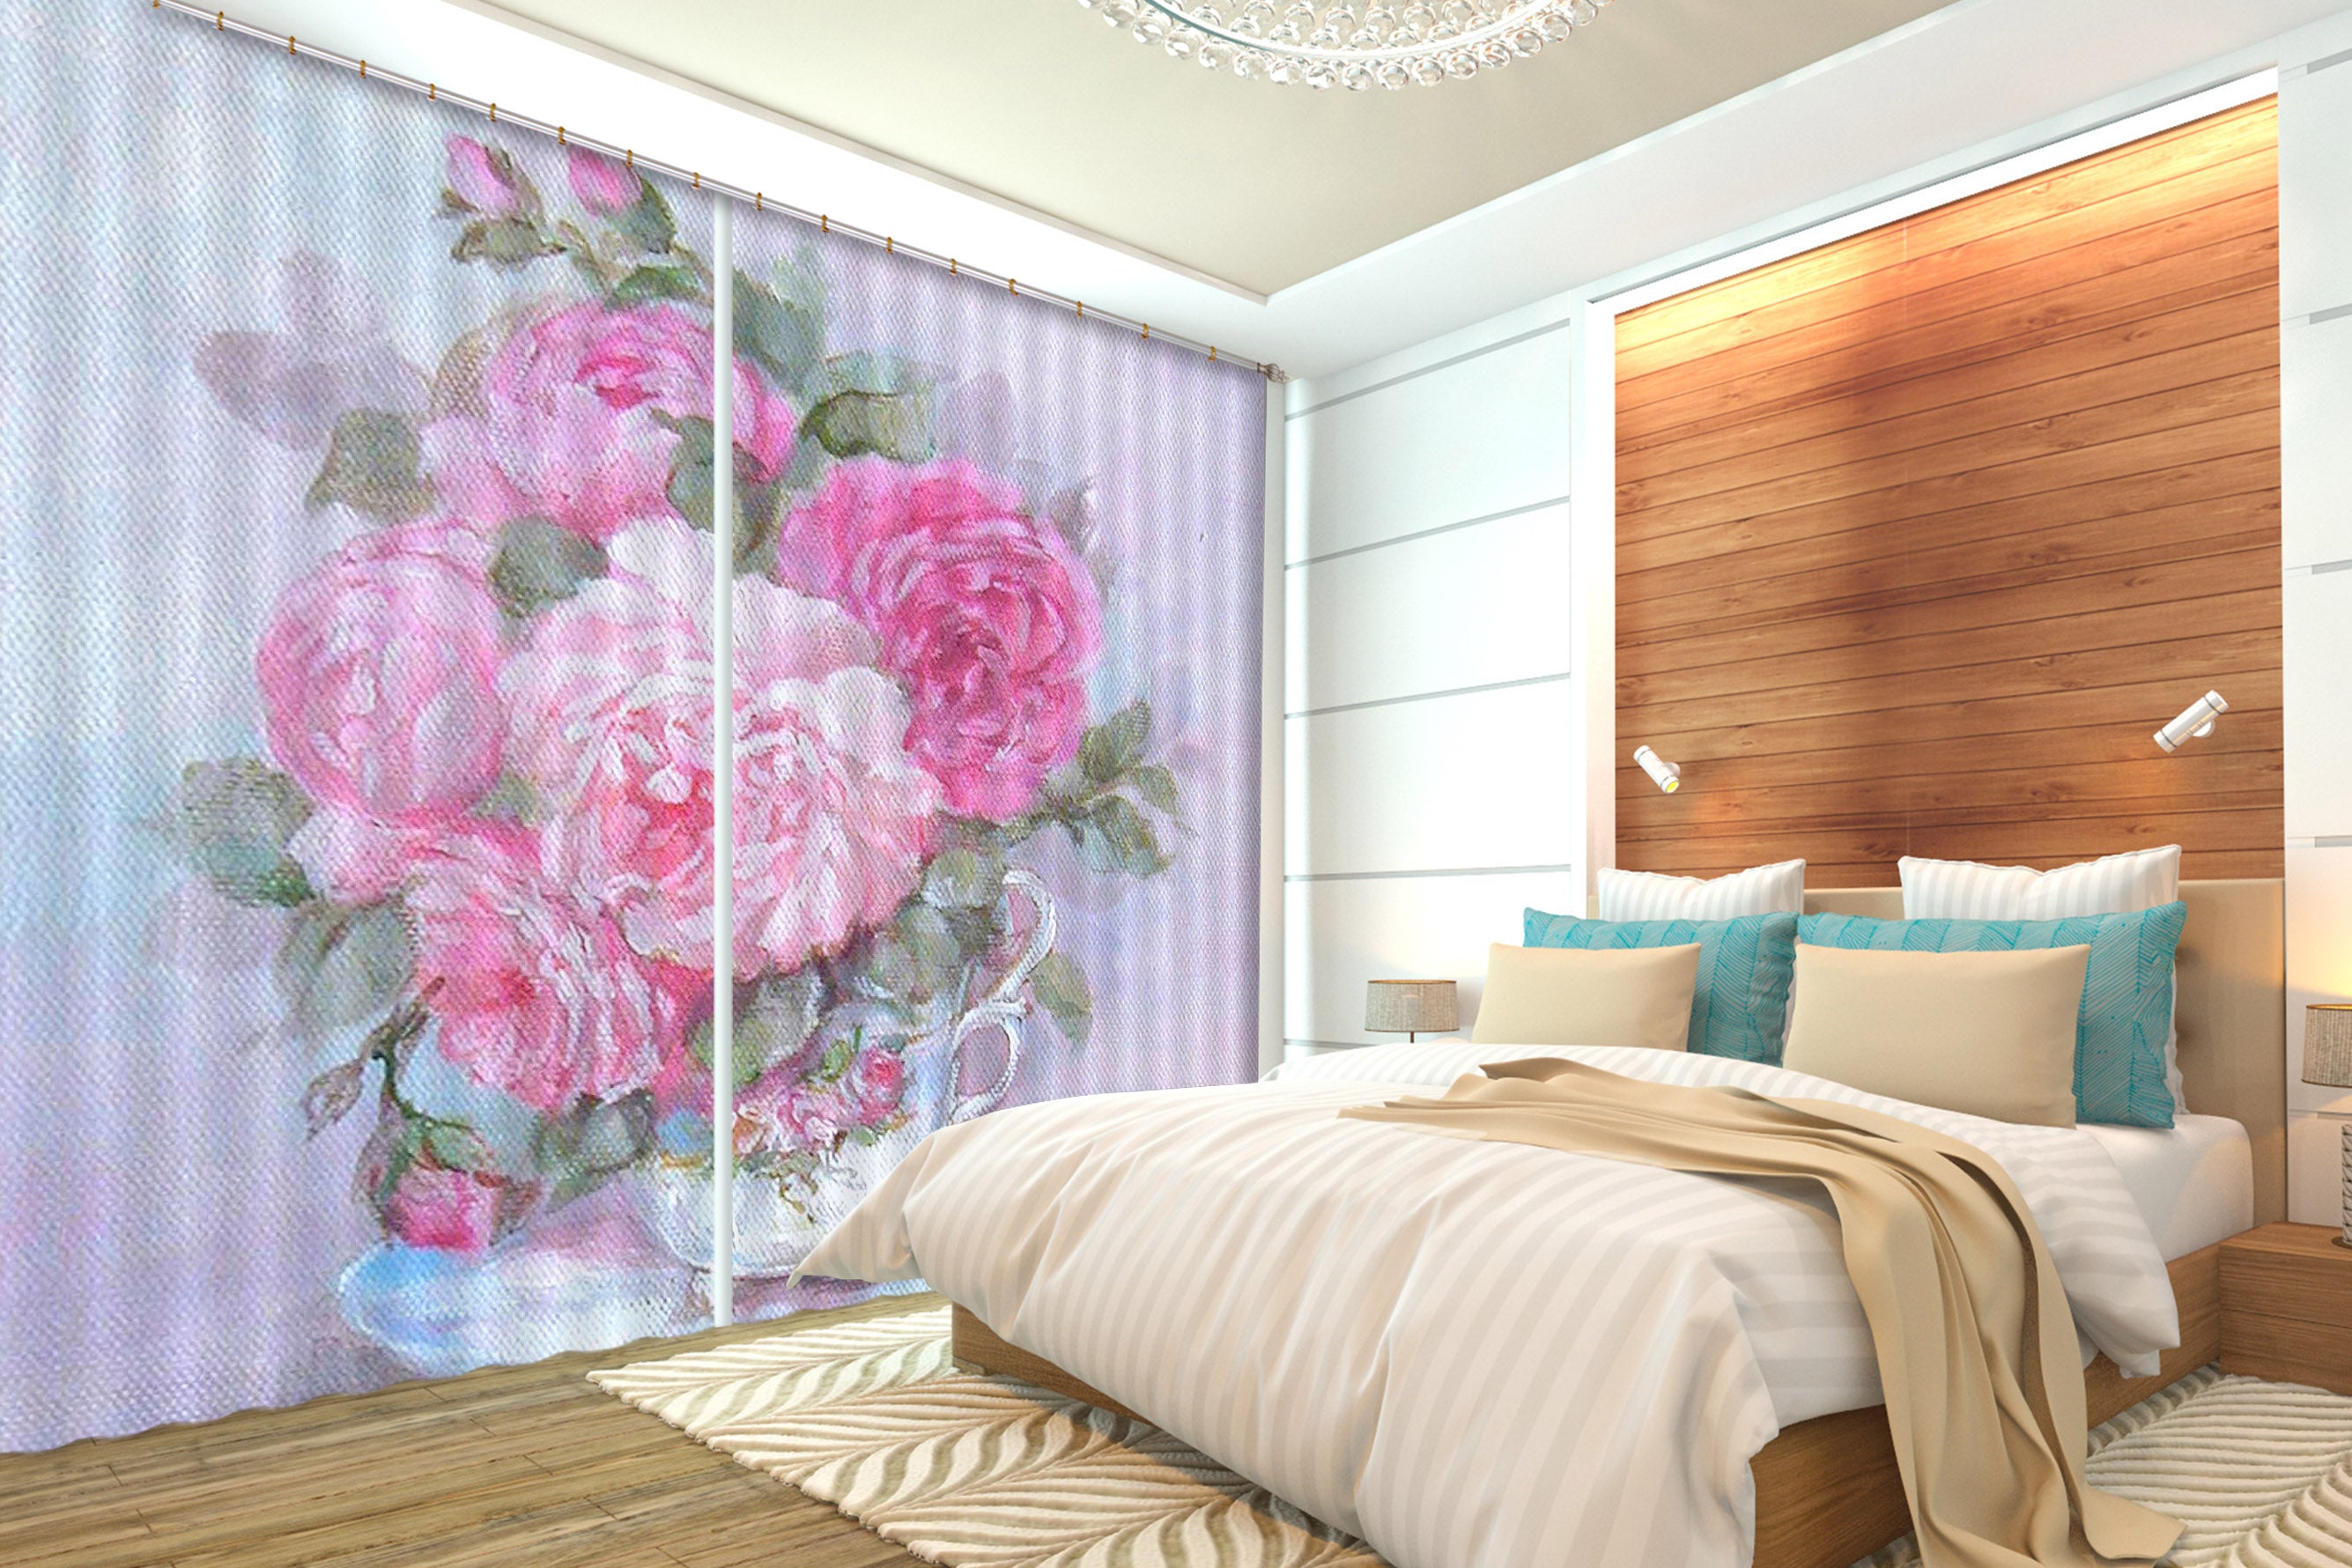 3D Pink Flowerpot 3084 Debi Coules Curtain Curtains Drapes